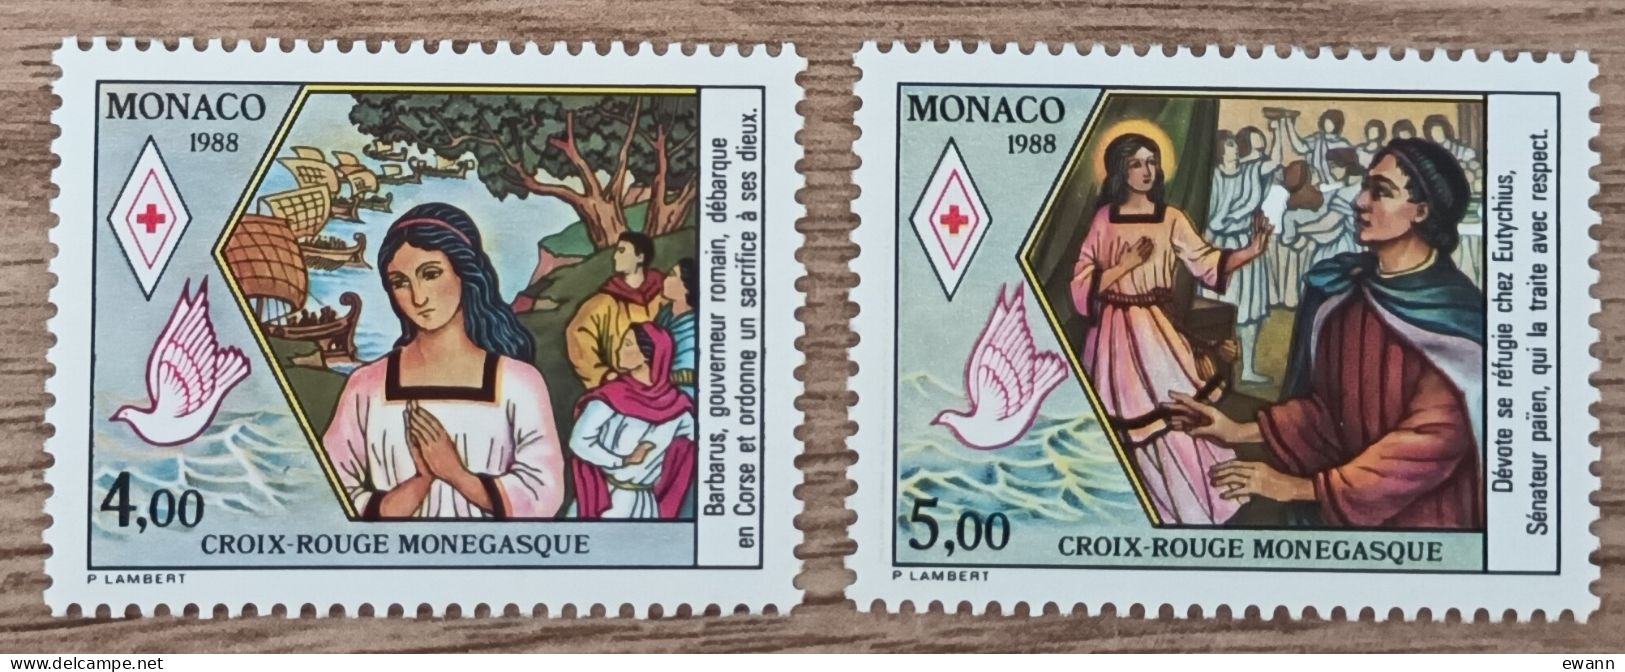 Monaco - YT N°1649, 1650 - Croix Rouge Monégasque - 1988 - Neuf - Unused Stamps